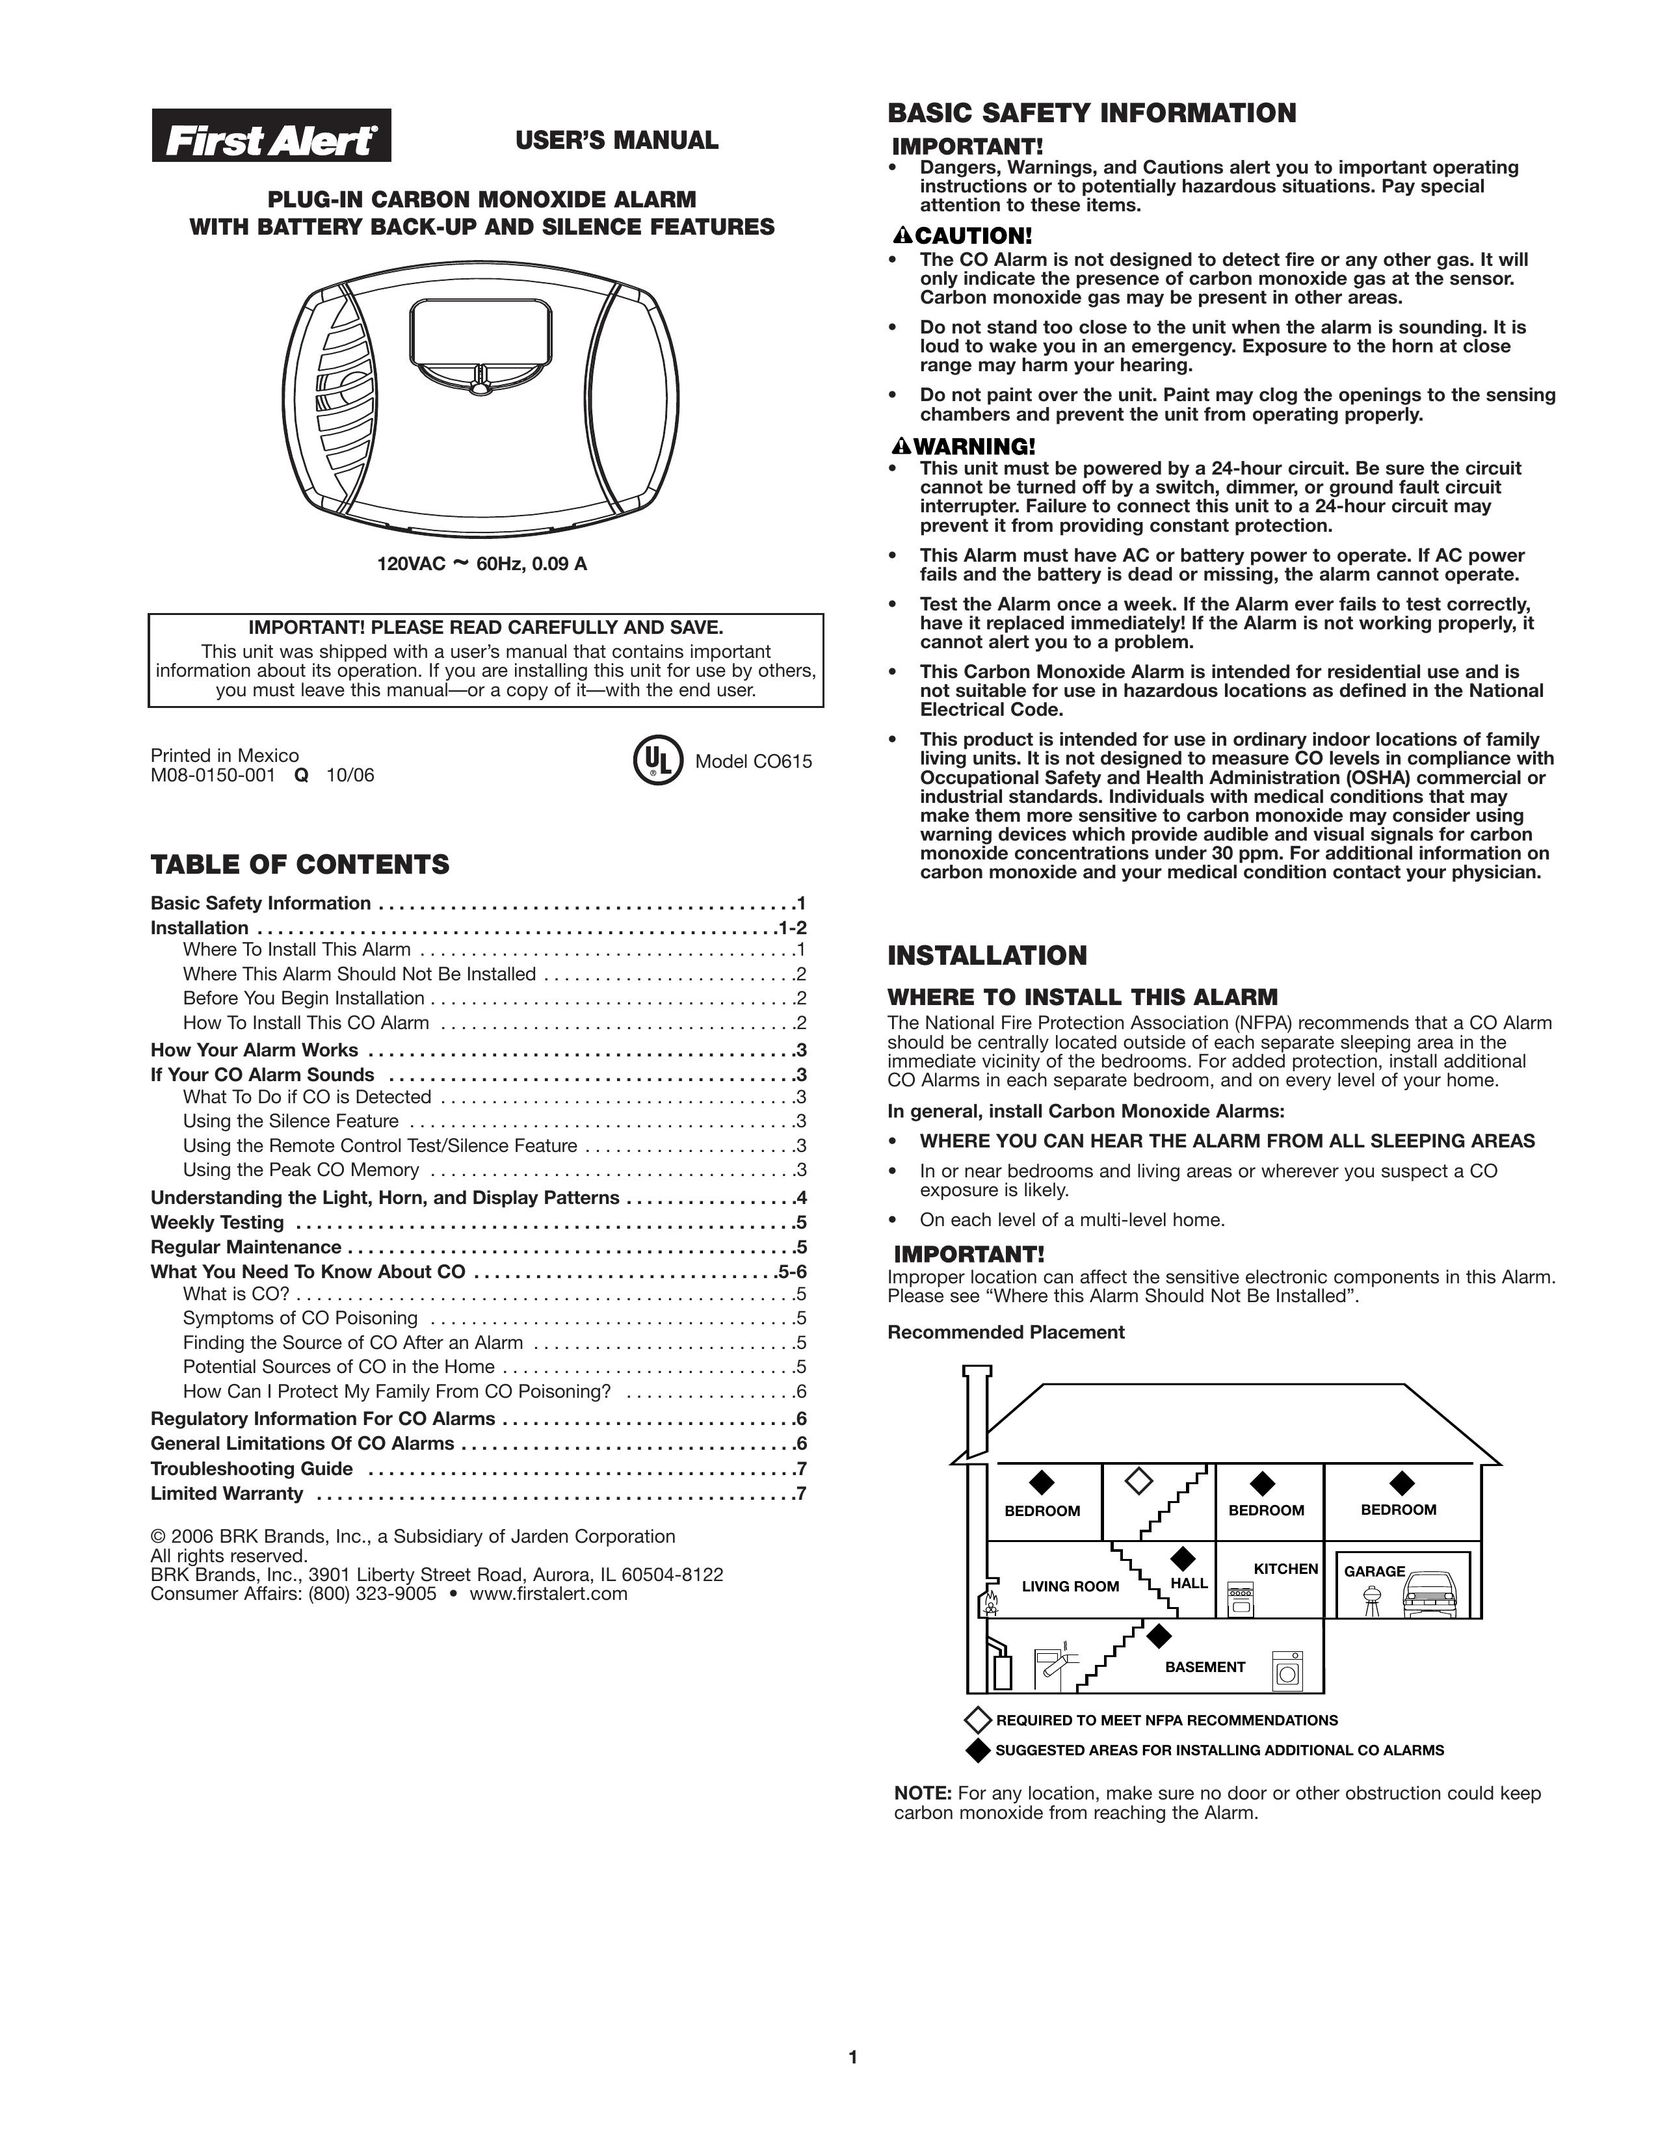 First Alert CO615 Carbon Monoxide Alarm User Manual